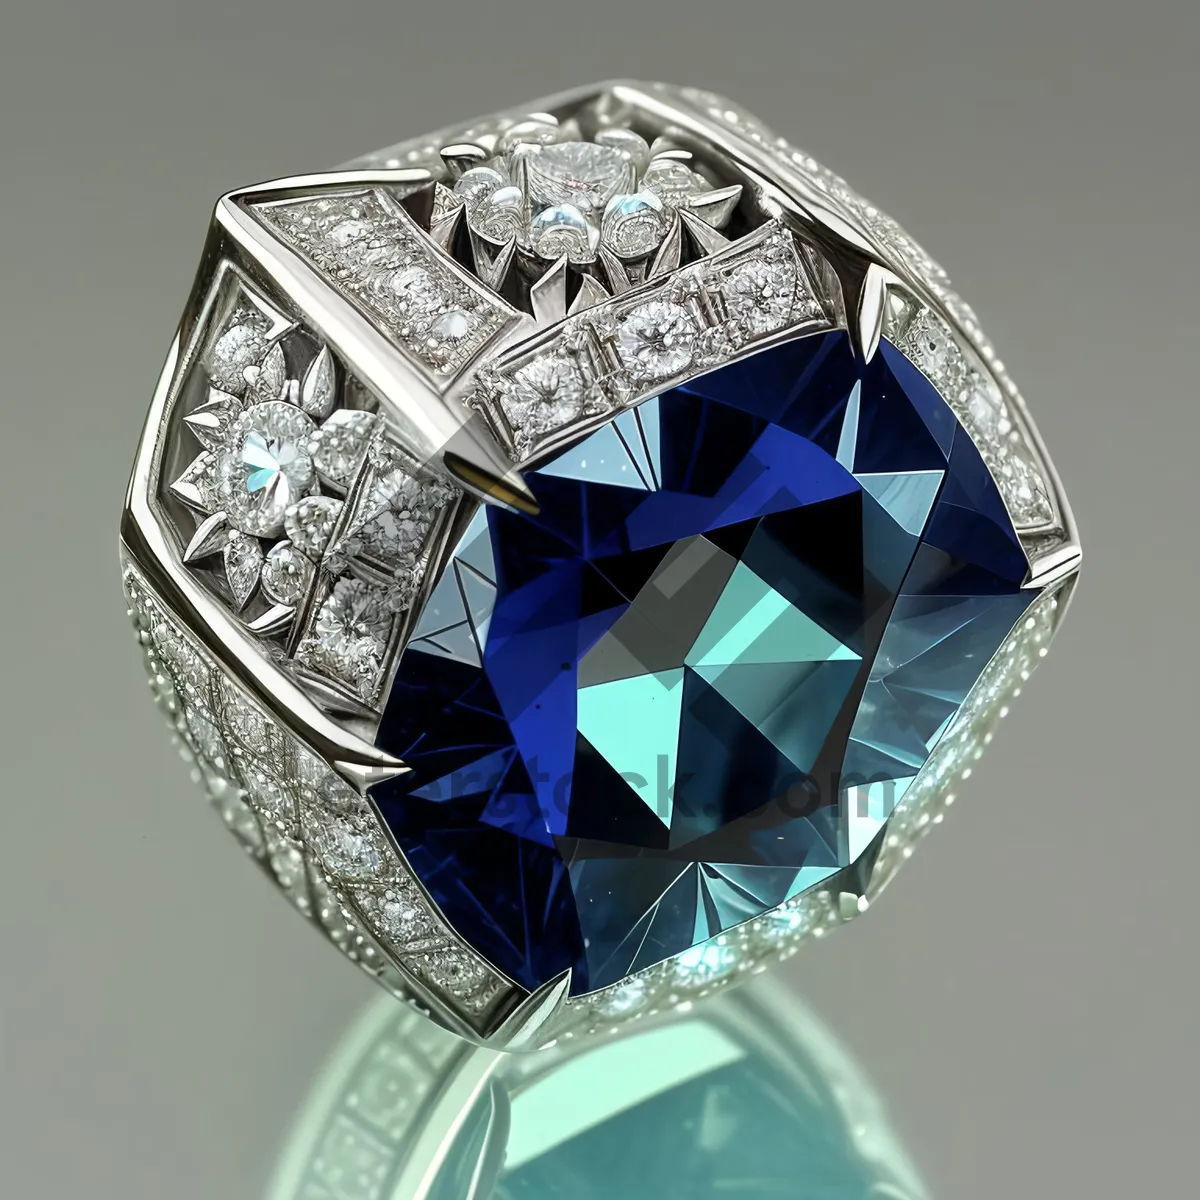 Picture of Sparkling Wealth: Diamond Jewel of Luxury